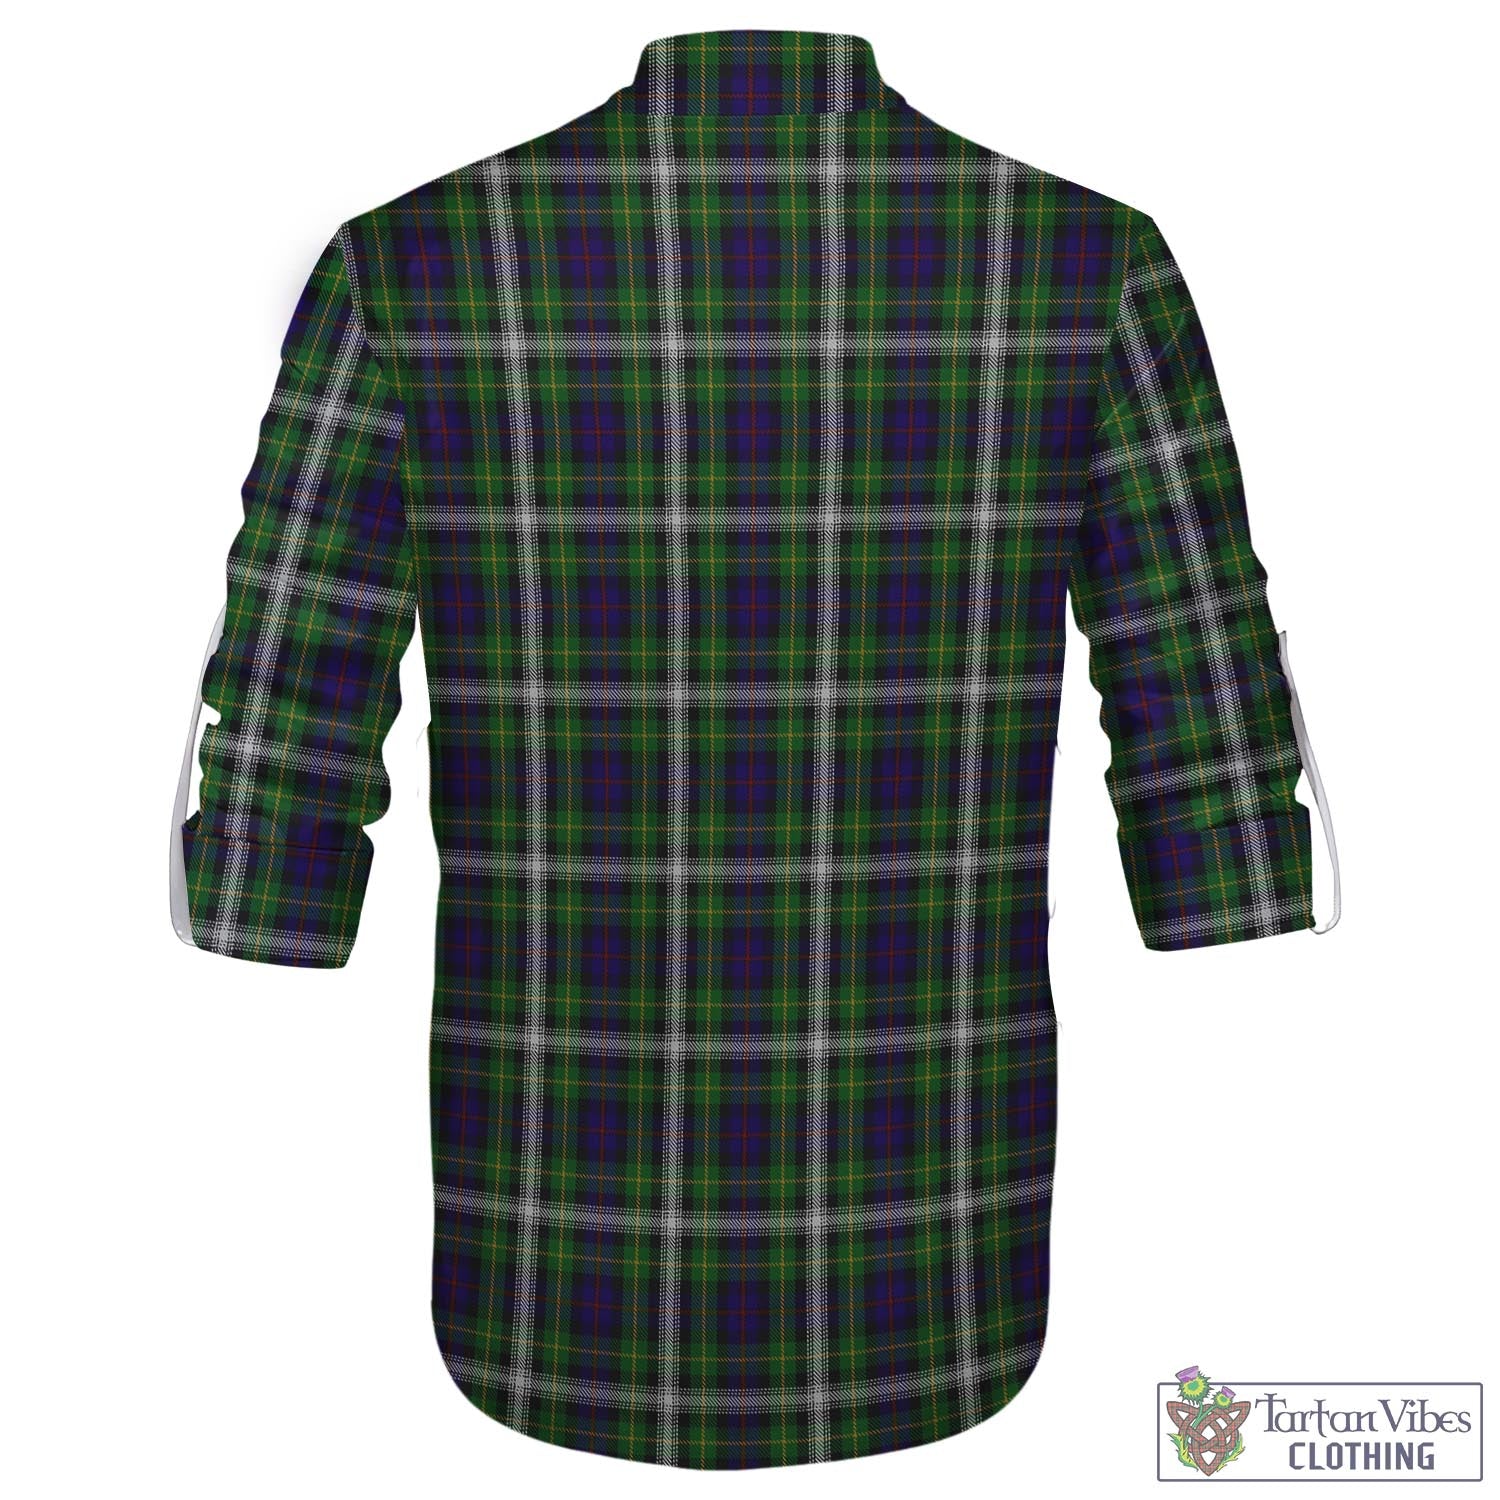 Tartan Vibes Clothing Farquharson Dress Tartan Men's Scottish Traditional Jacobite Ghillie Kilt Shirt with Family Crest